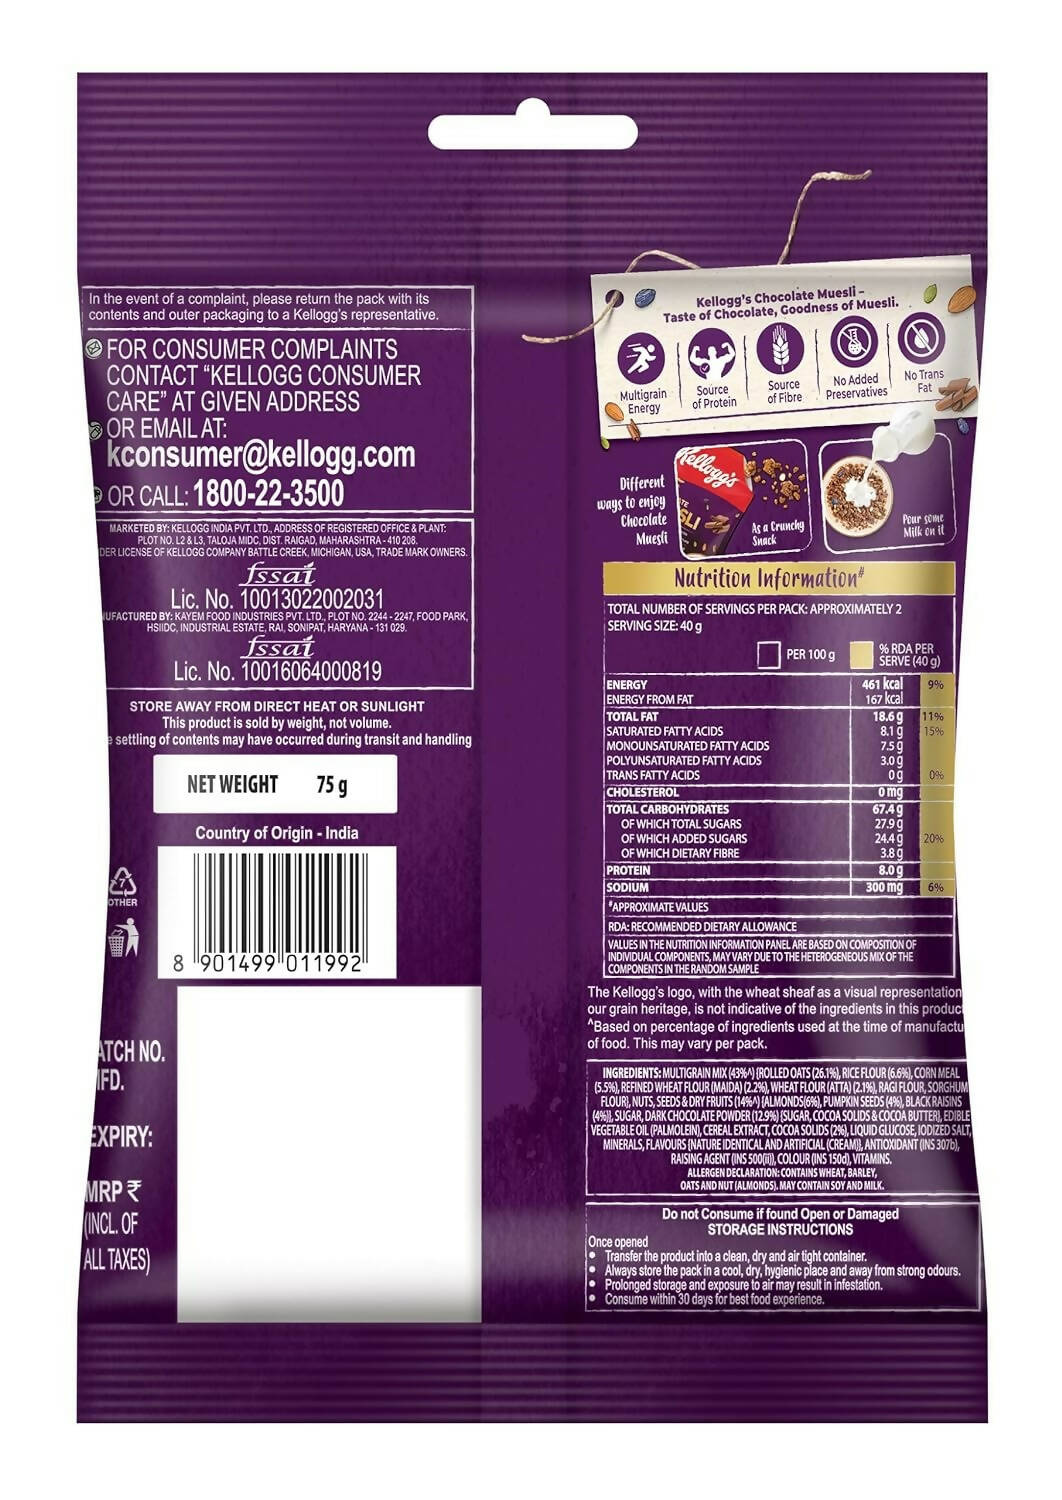 New Kellogg's Chocolate Muesli 57% Multigrain, Fruit, Nut & Seeds - Distacart